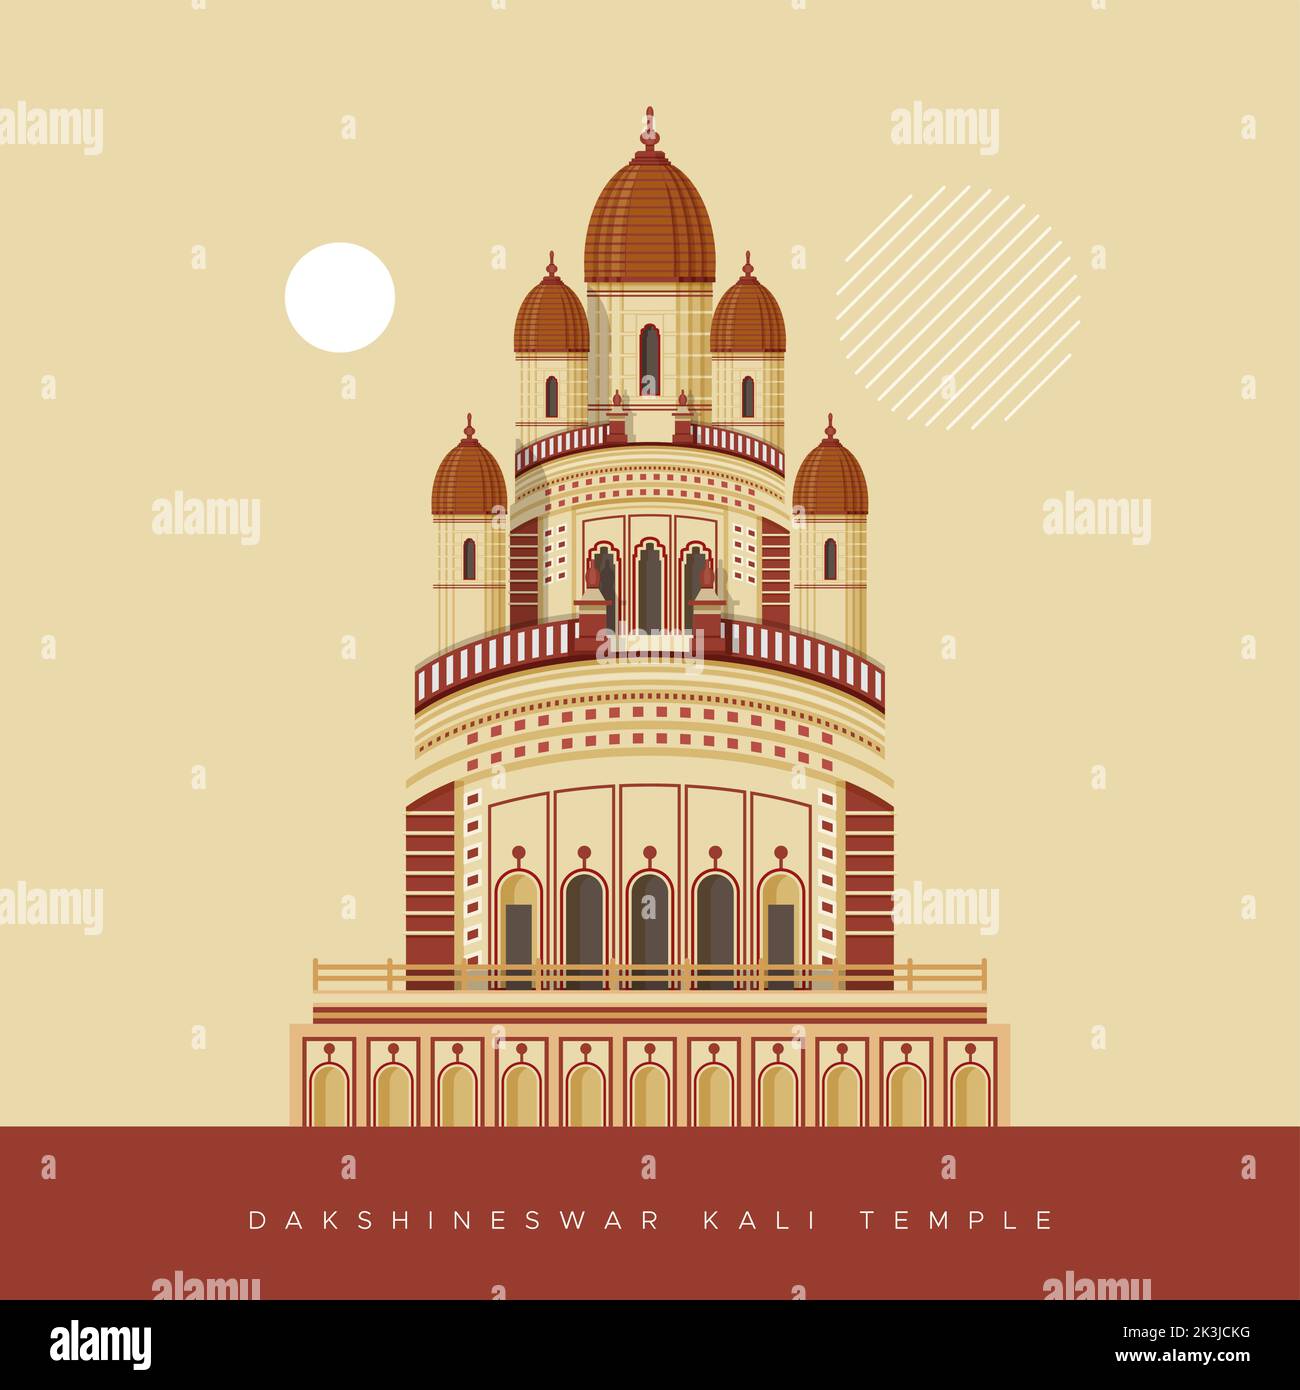 Kolkata City - Dakshineswar Kali Temple -  Icon Illustration as EPS 10 File Stock Vector